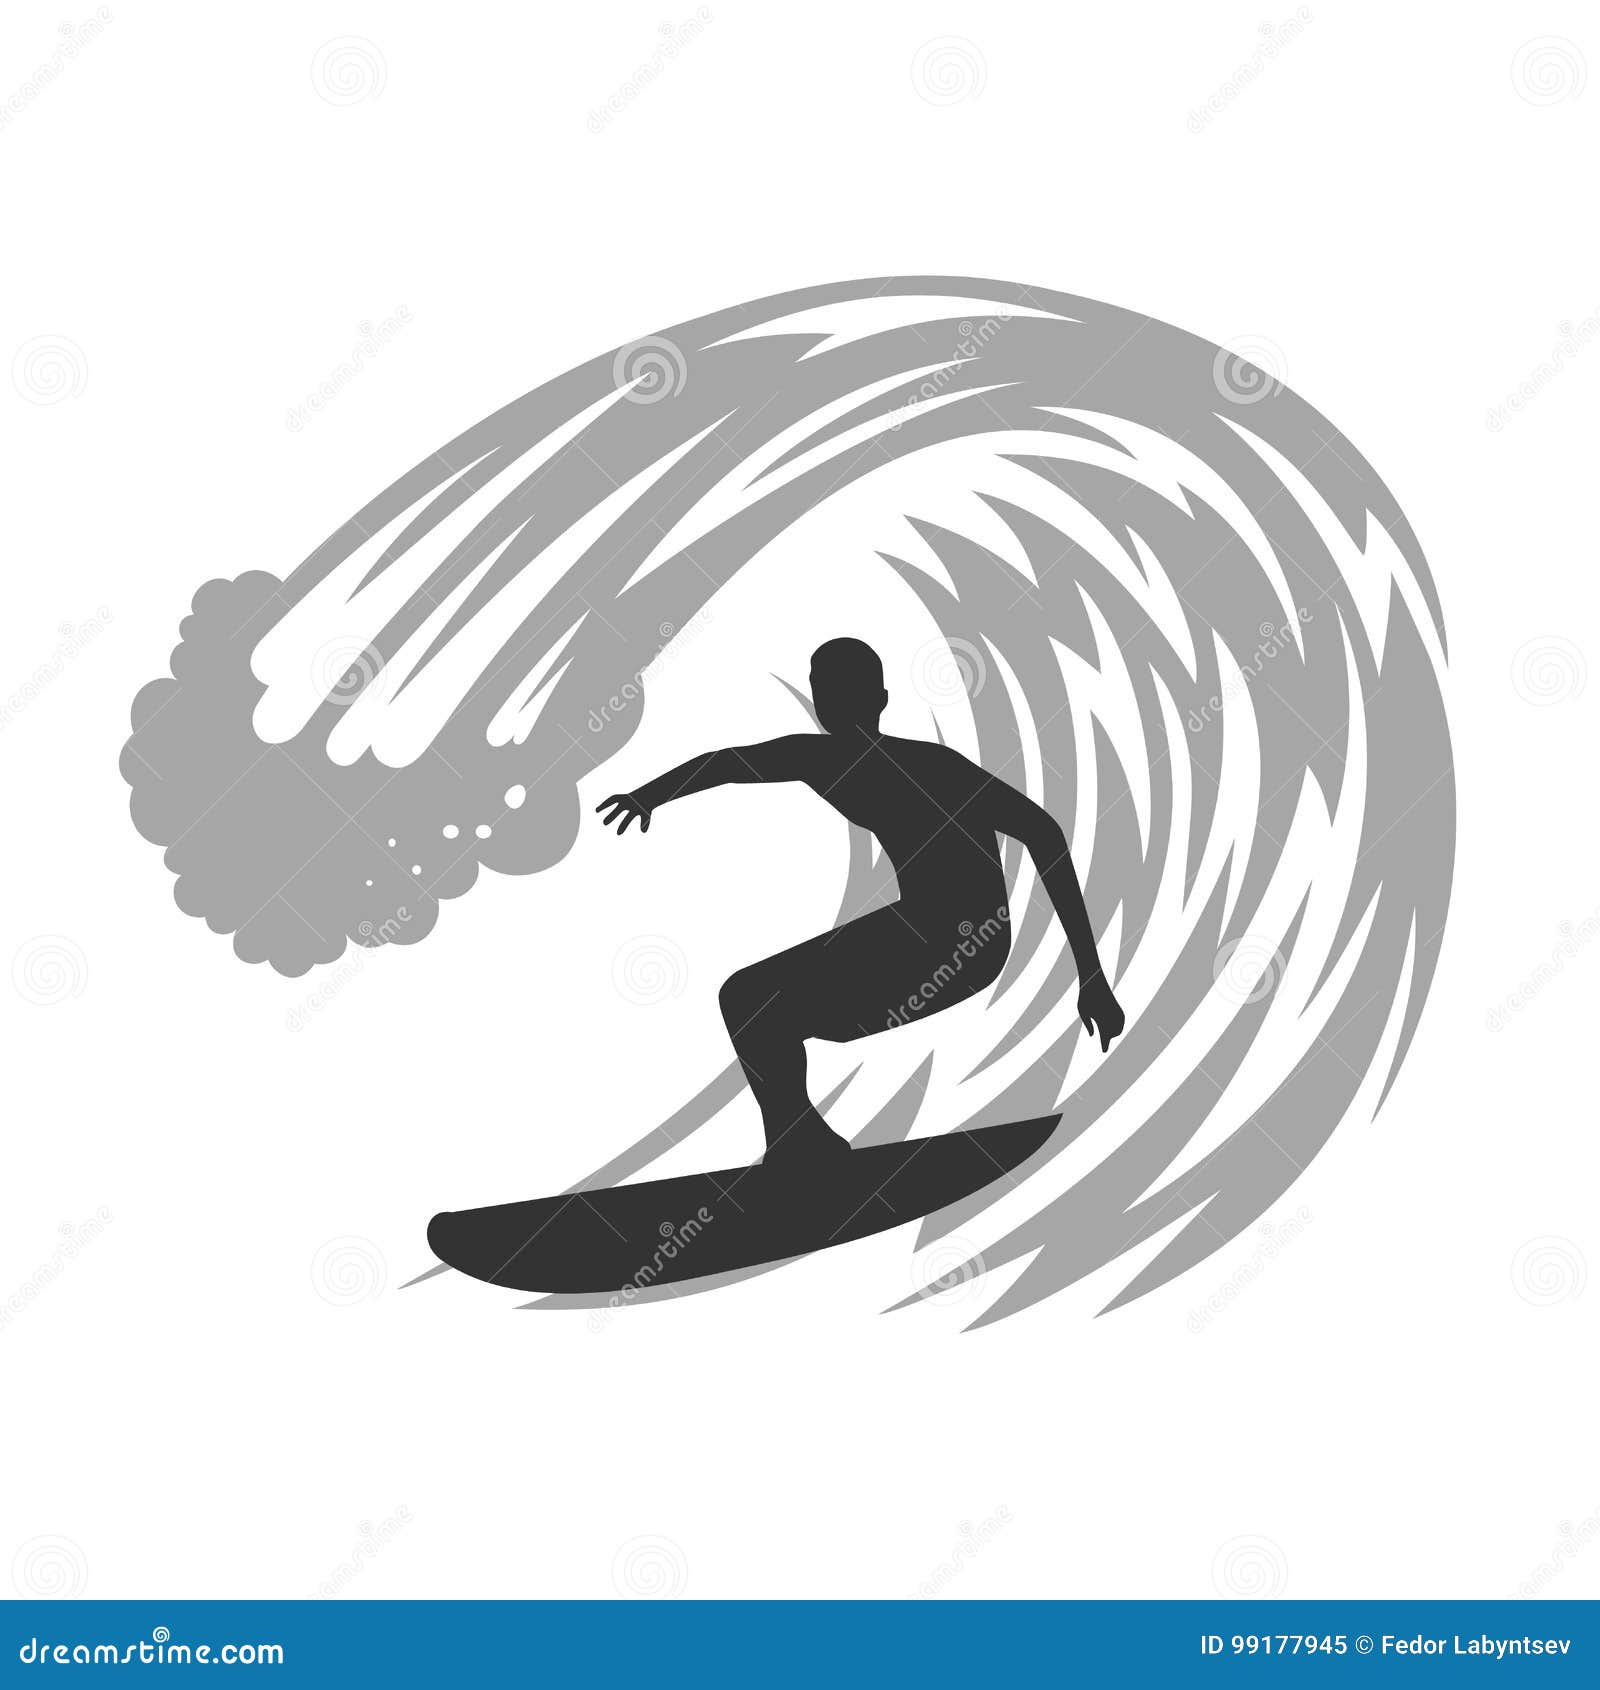 On the image presented Surfer on wave vector illustration.